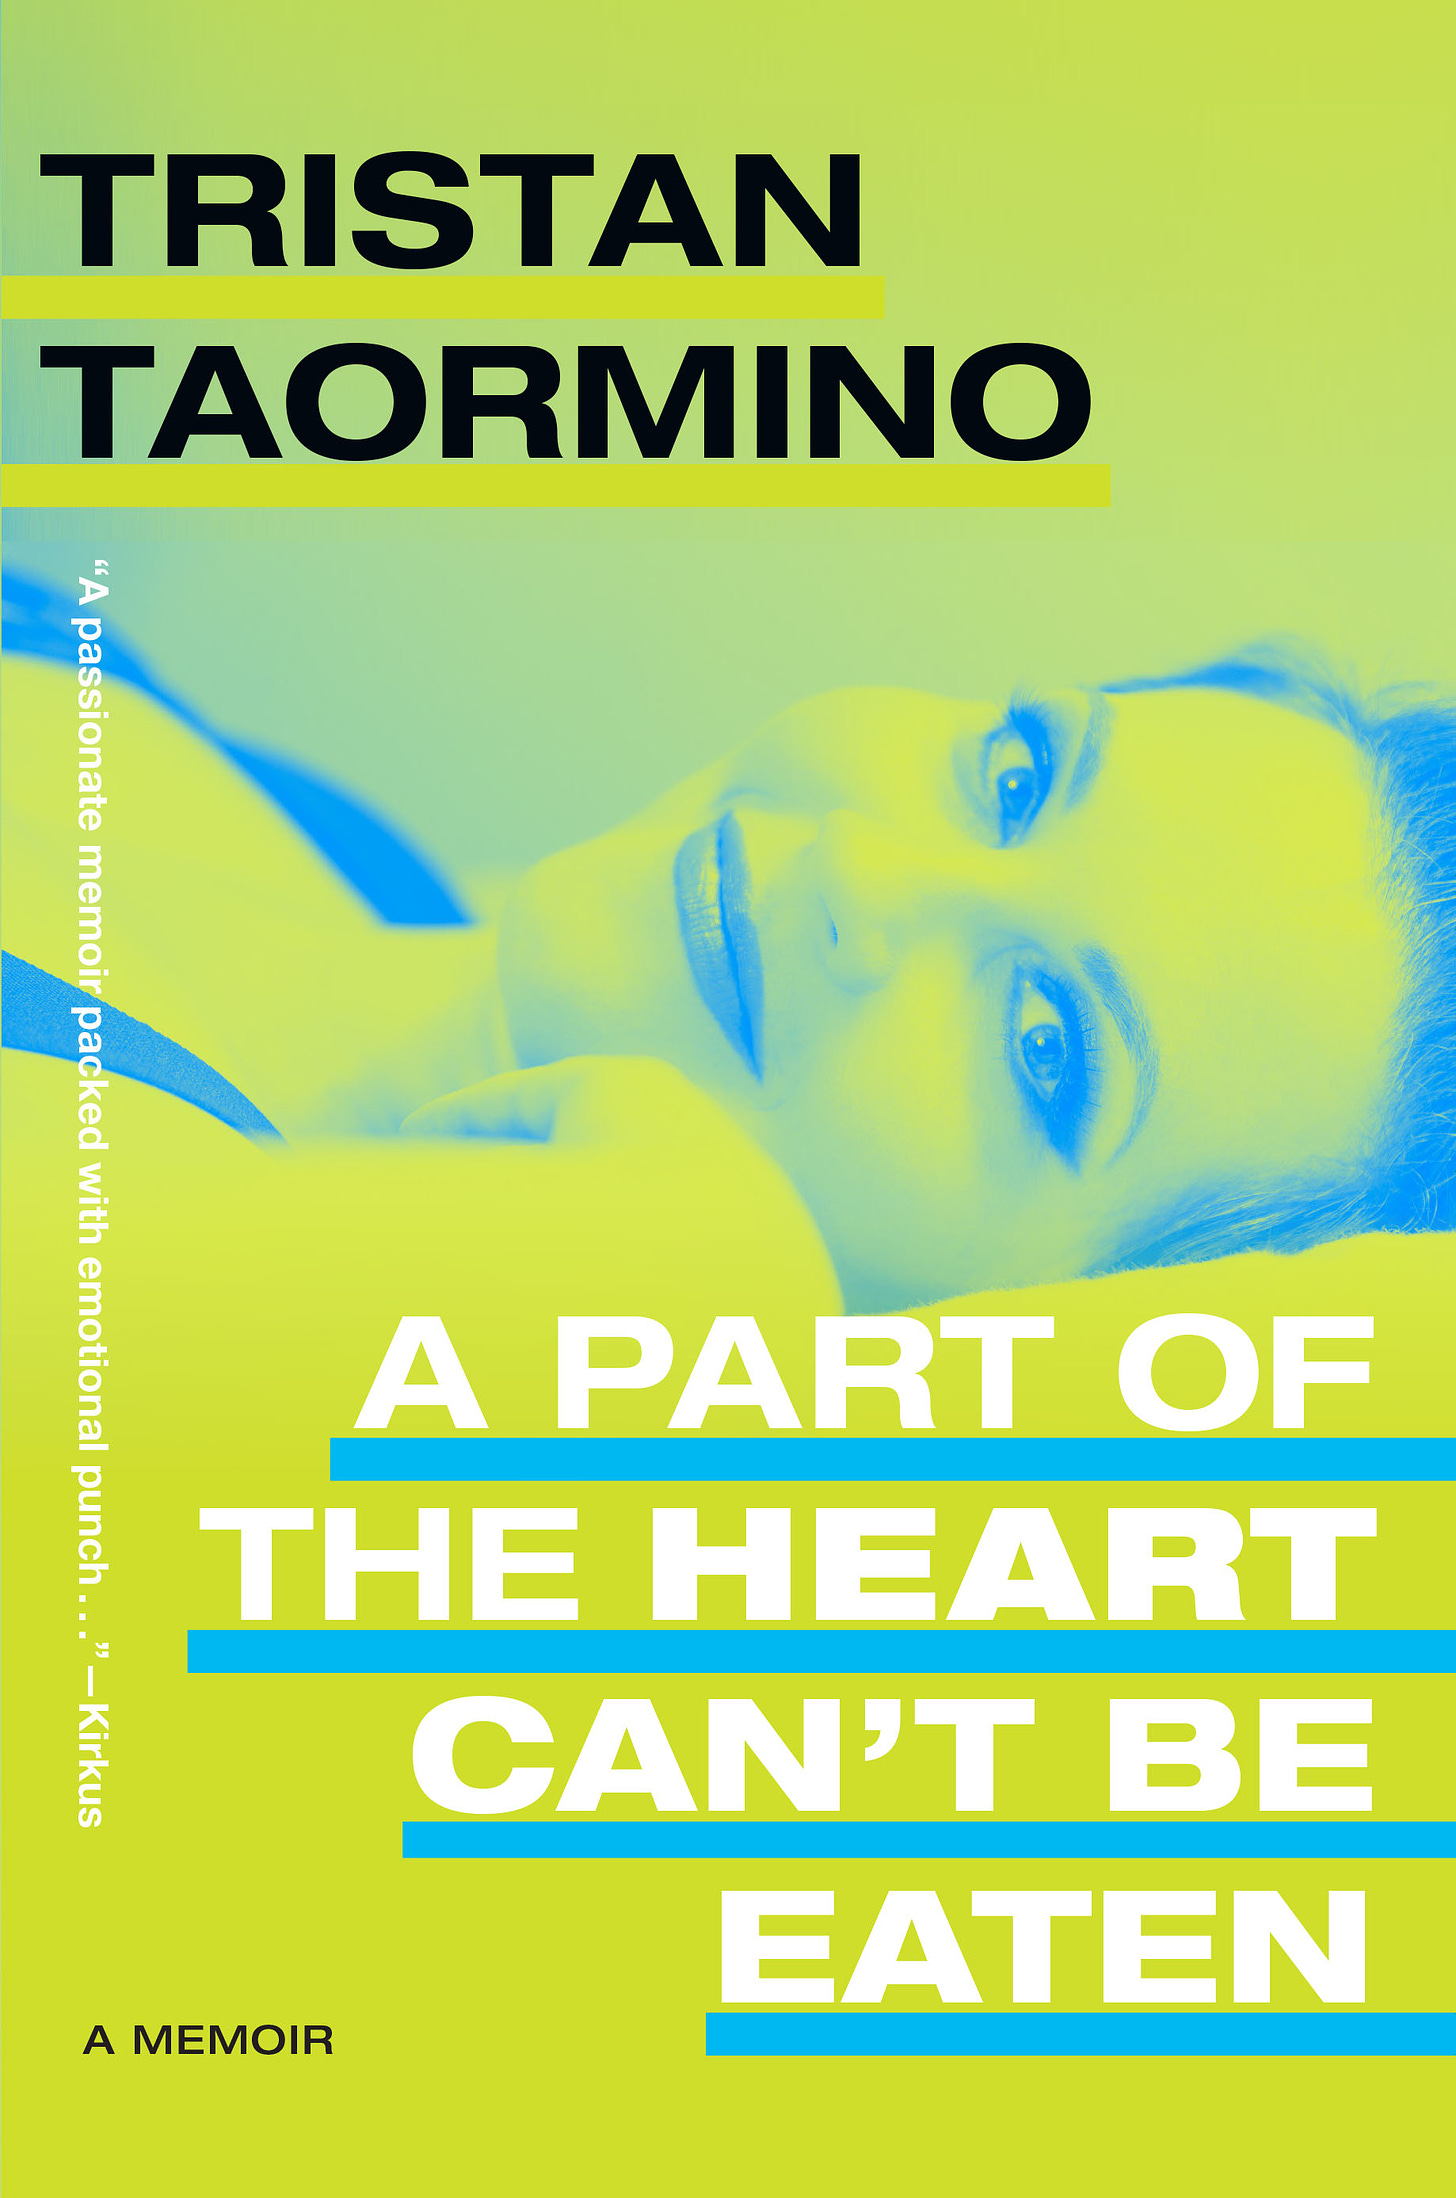 tristan taormino memoir a part of the heart can't be eaten